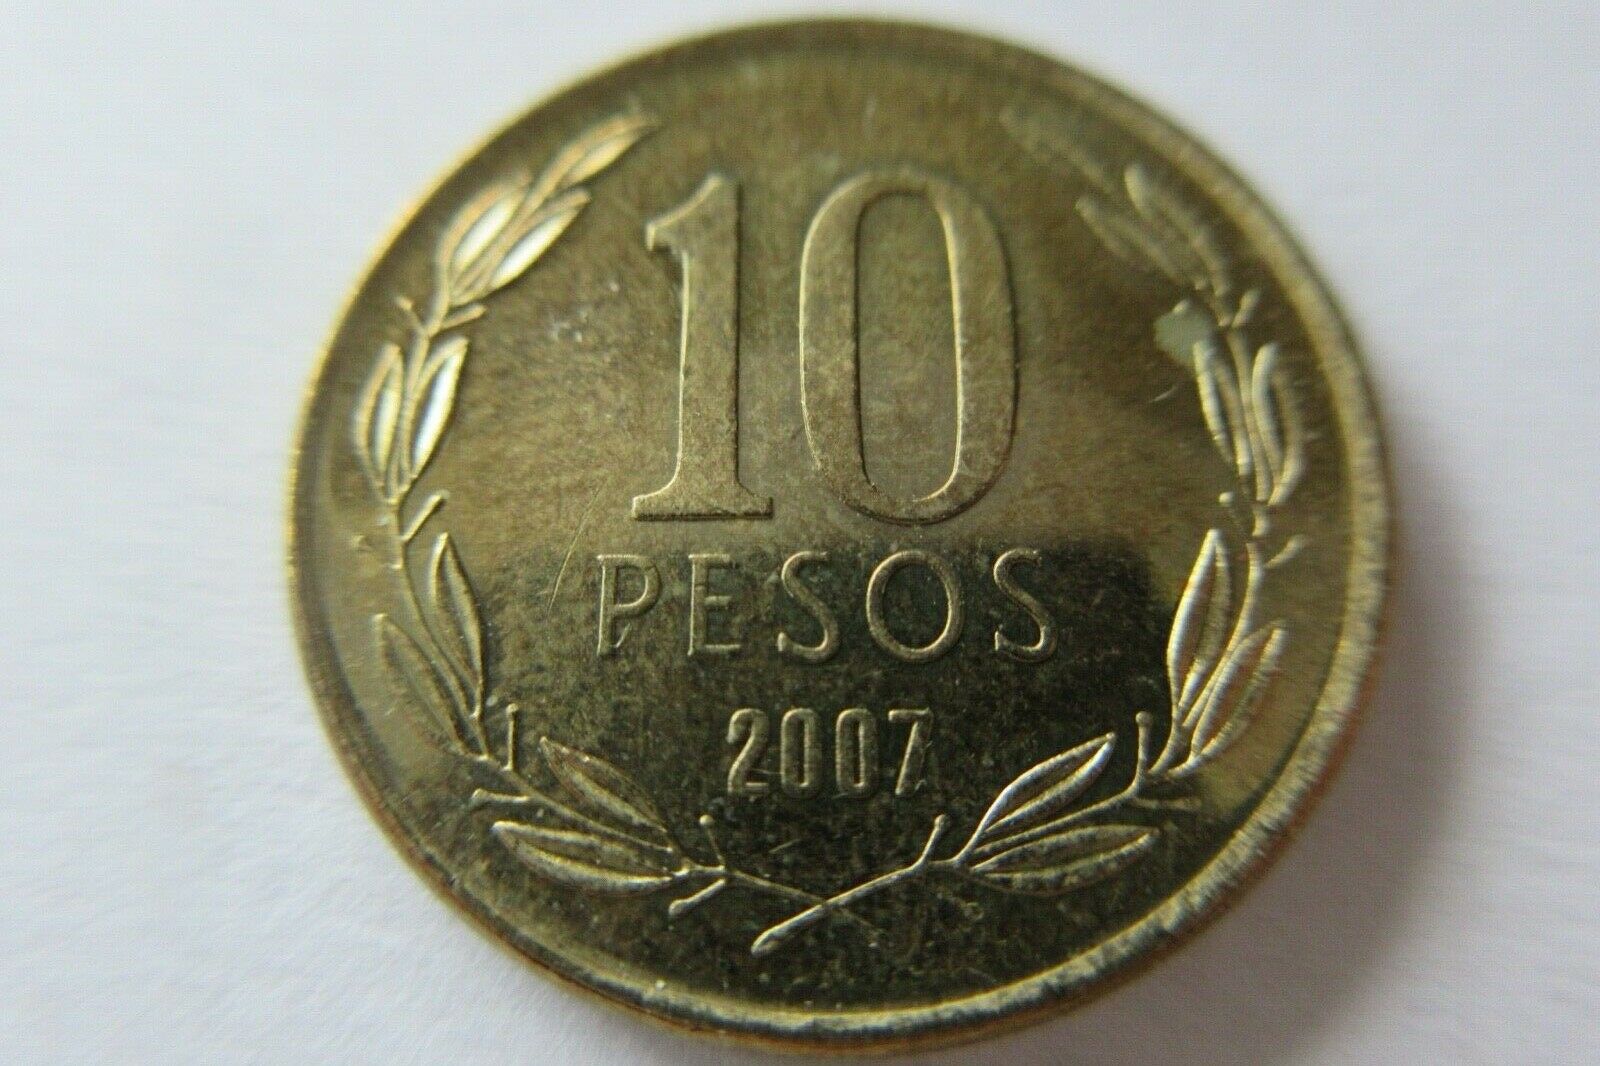 Chile 10 Pesos 2007 Circulated Coin